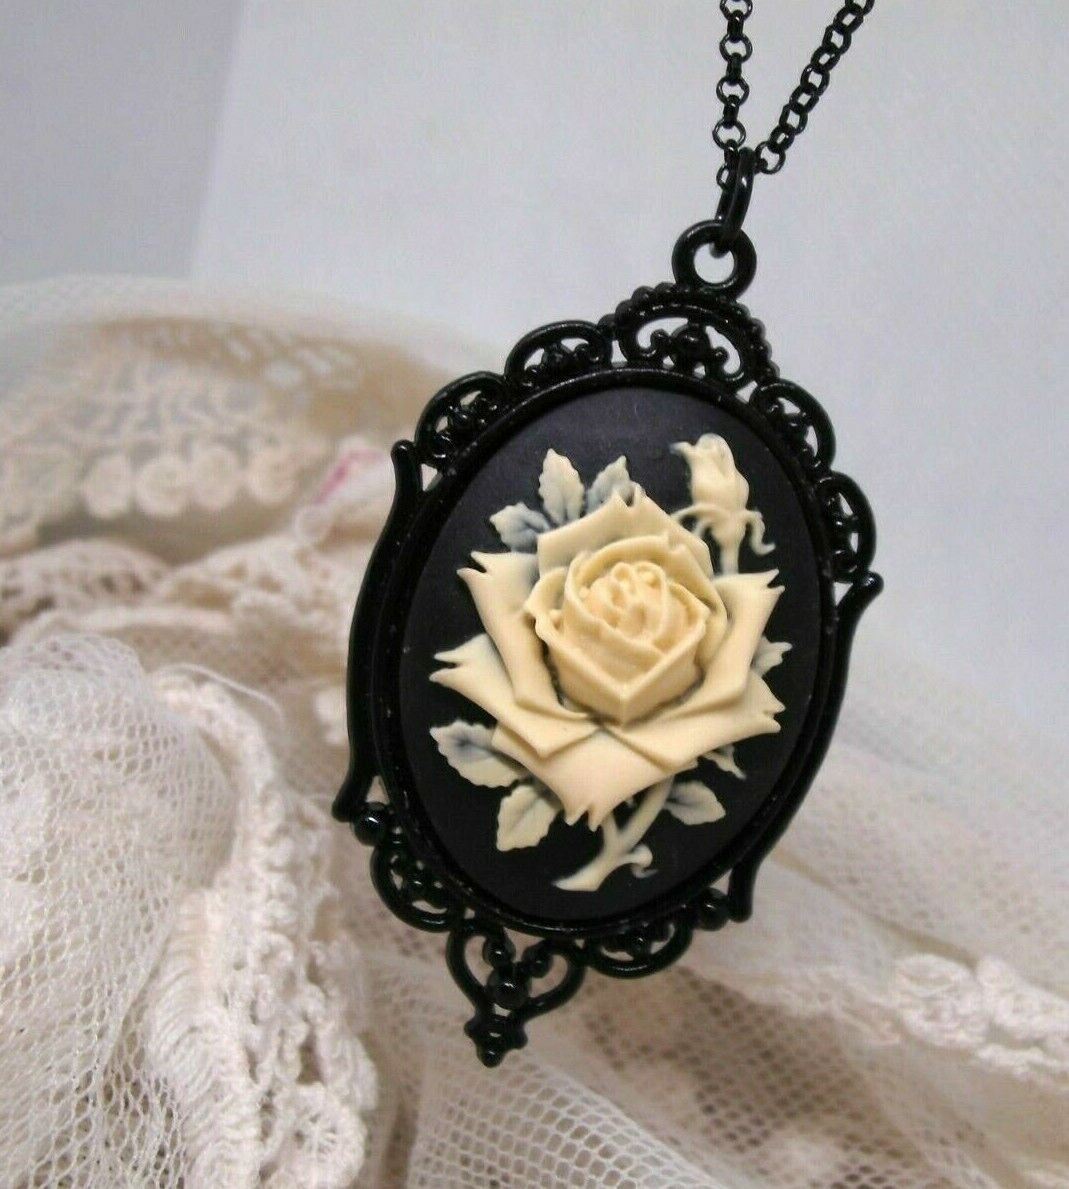 Black antique white cameo rose rockabilly necklace pendant Gothic Victorian  